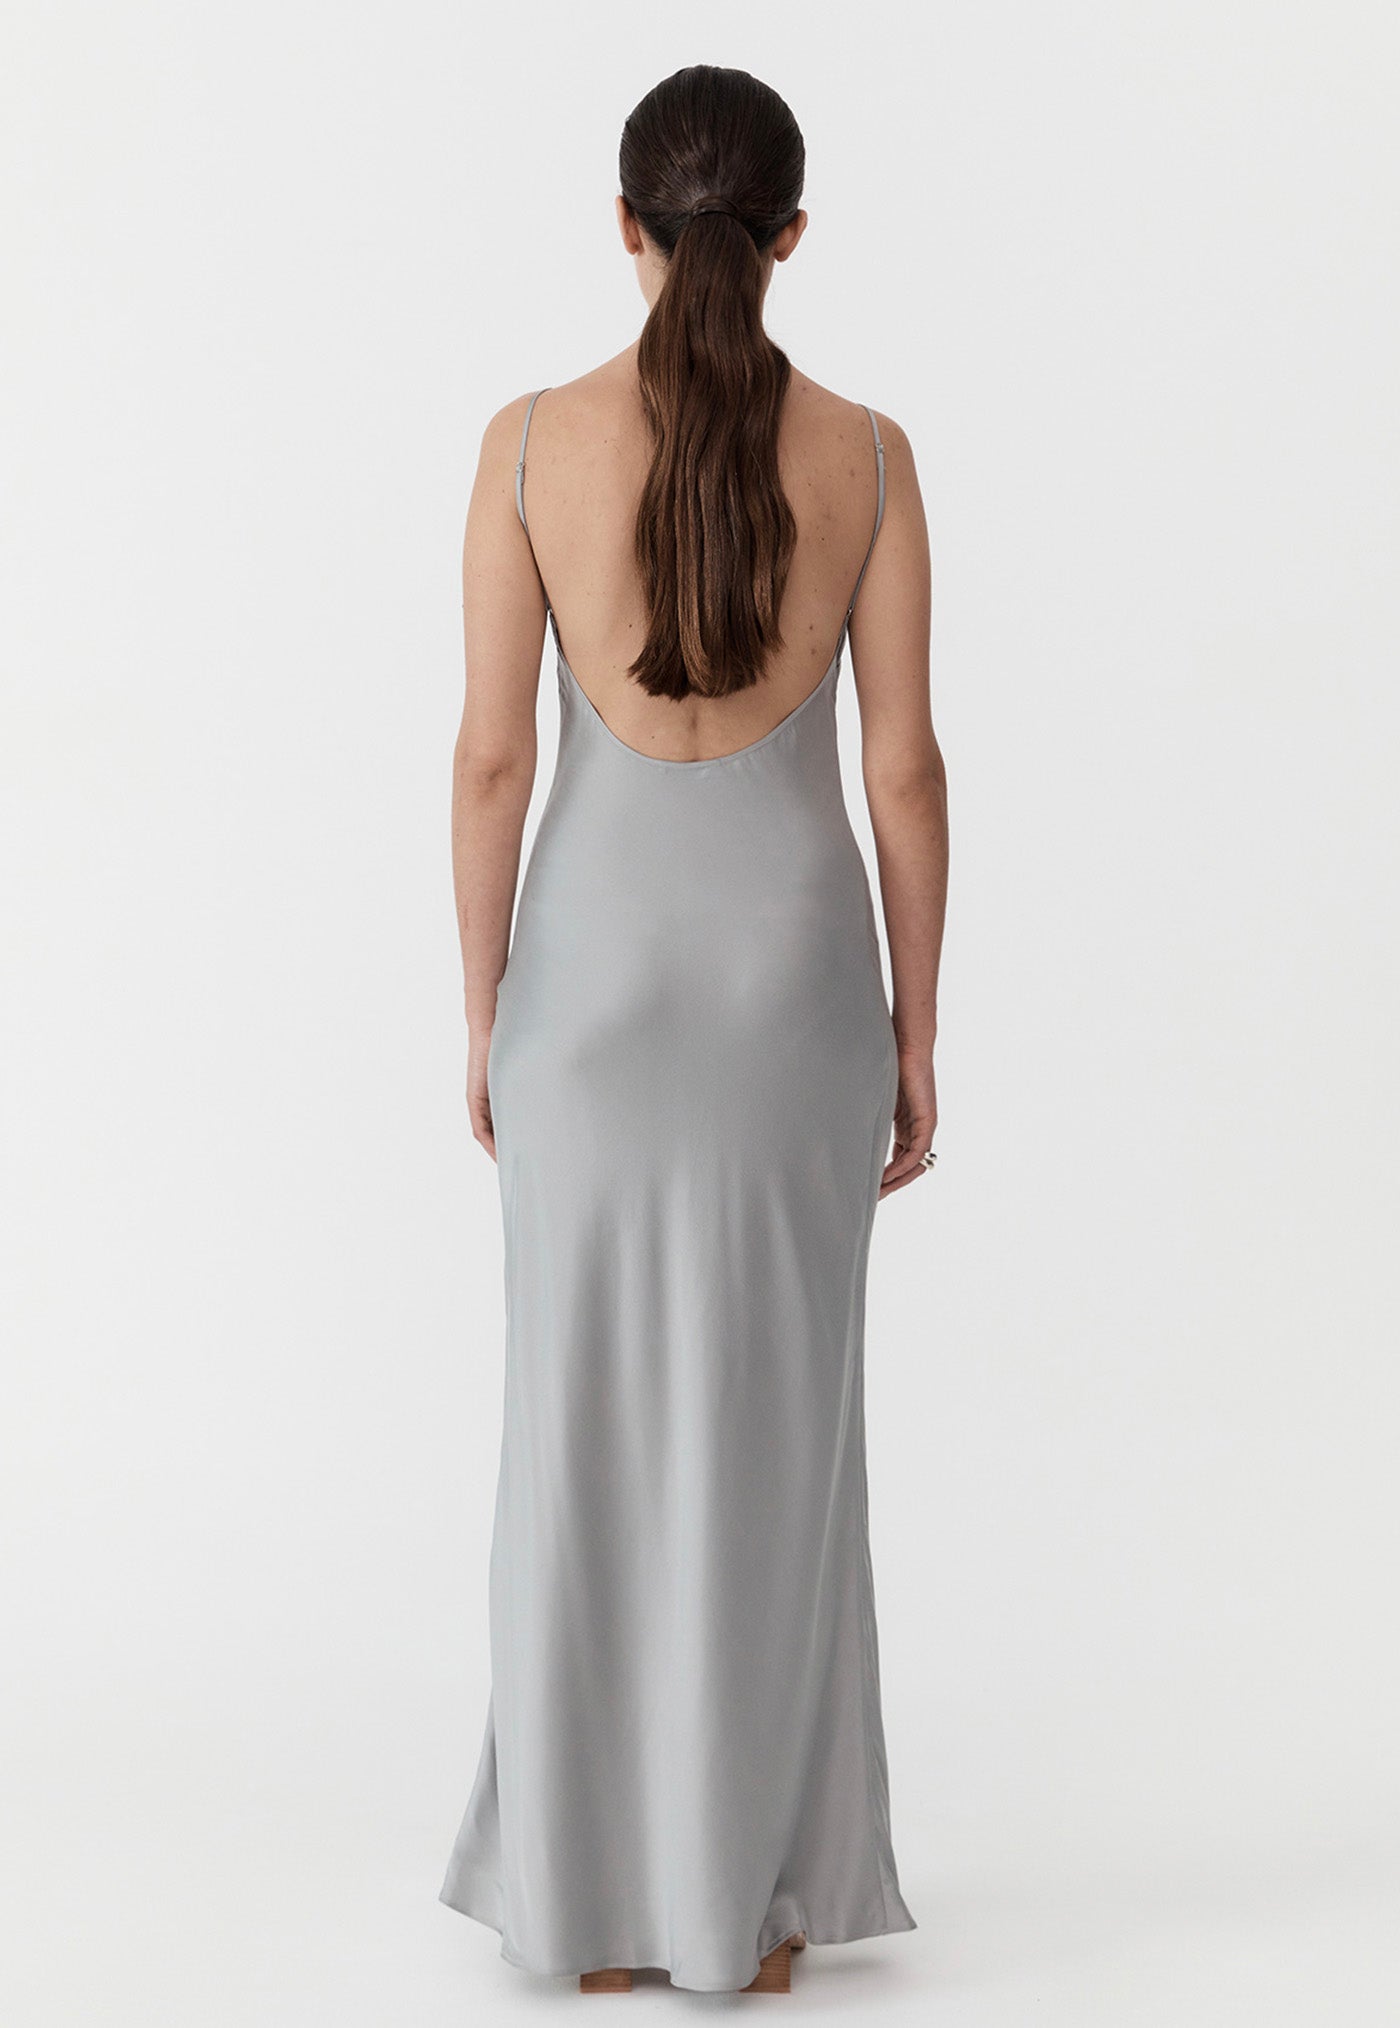 Low Back Slip Dress - Silver sold by Angel Divine